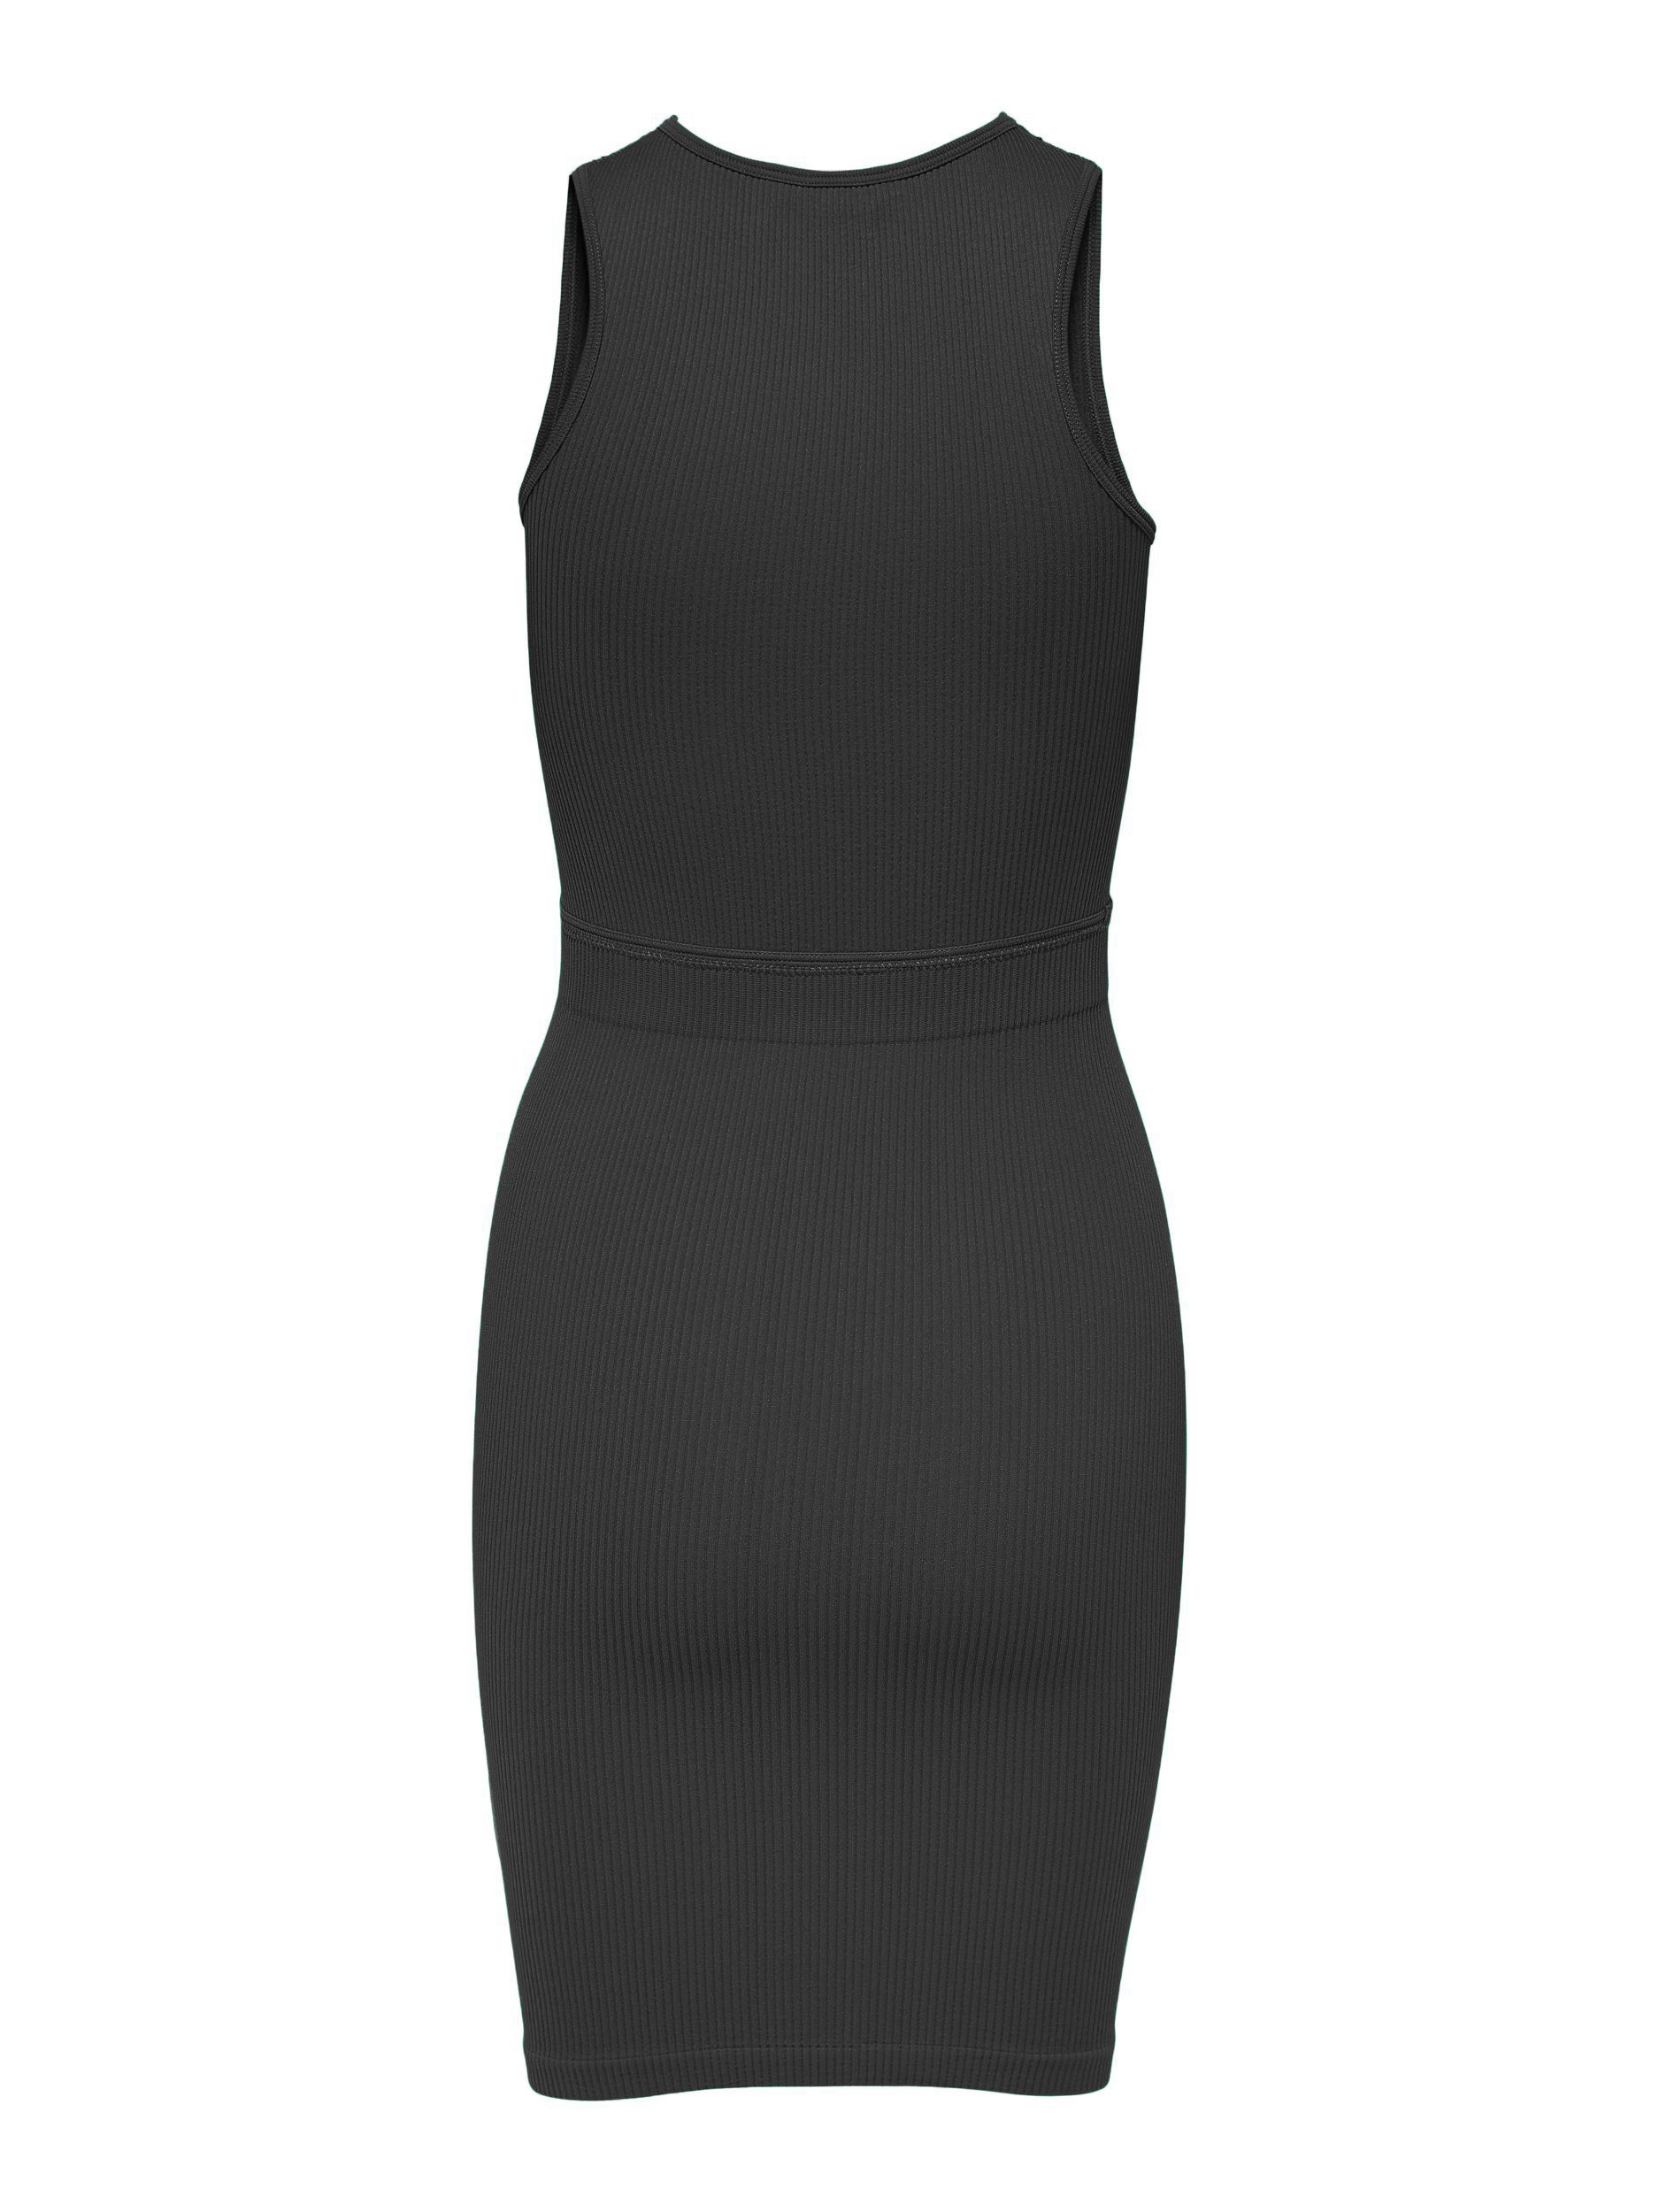 Gwen cutout rib mini dress, BLACK, large